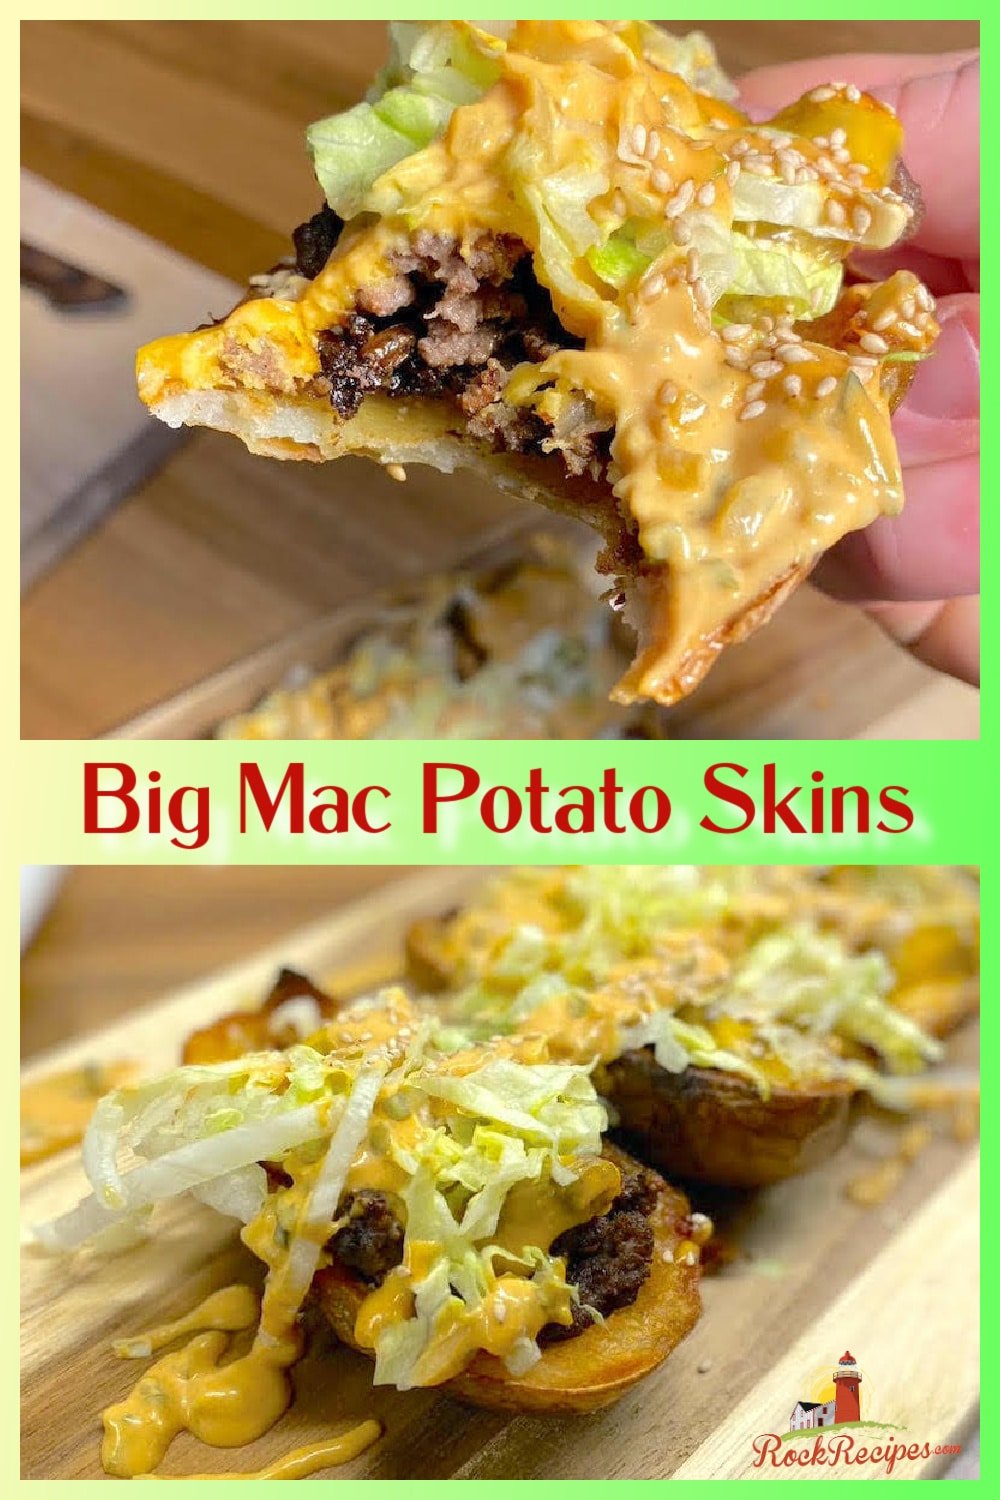 Big Mac Potato Skins photo collage for Pinterest